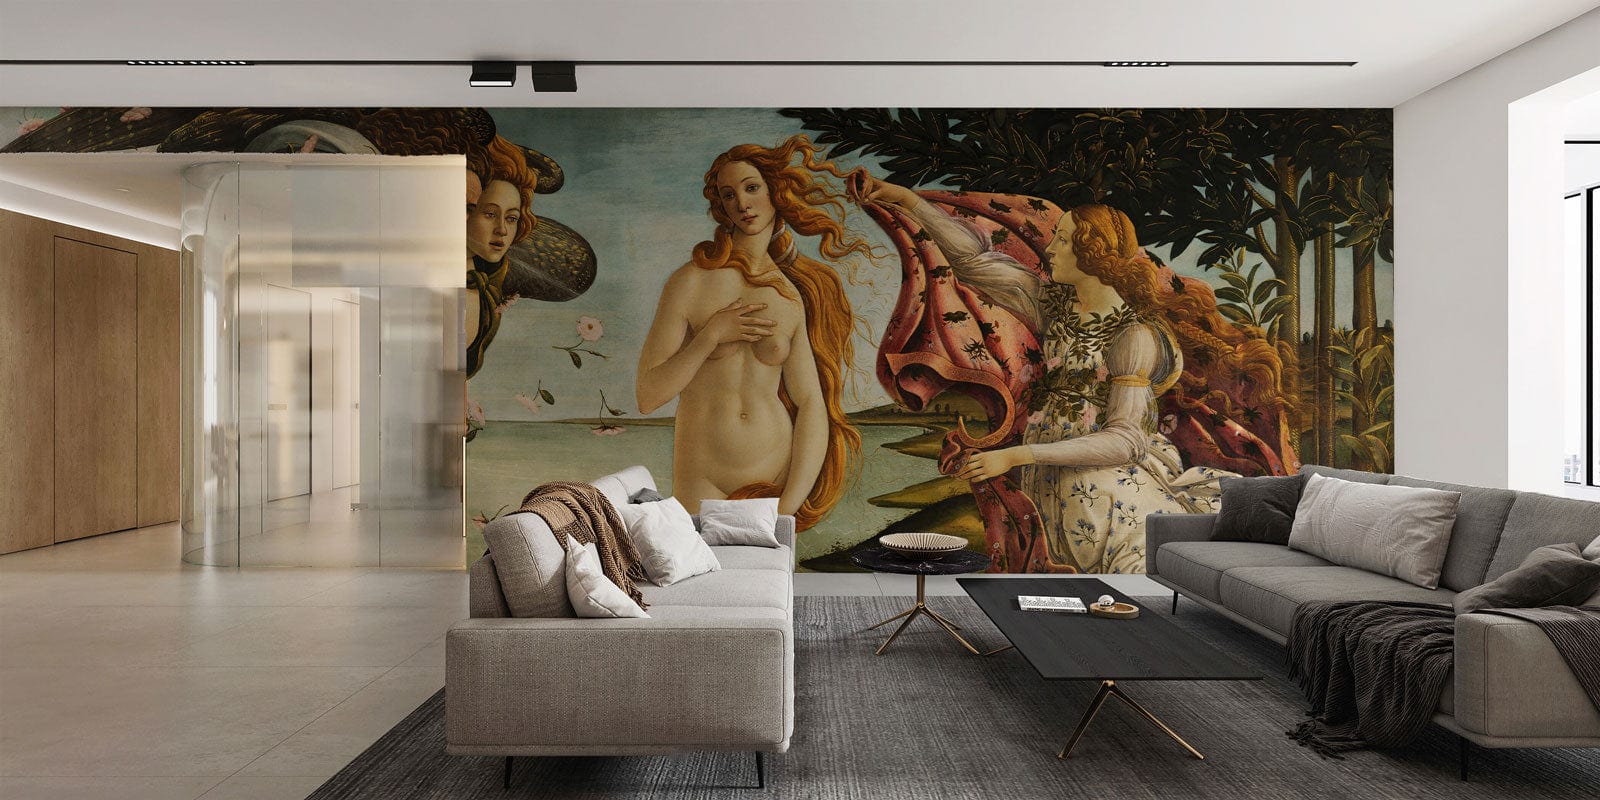 famous painting wallpaper mural hallway design